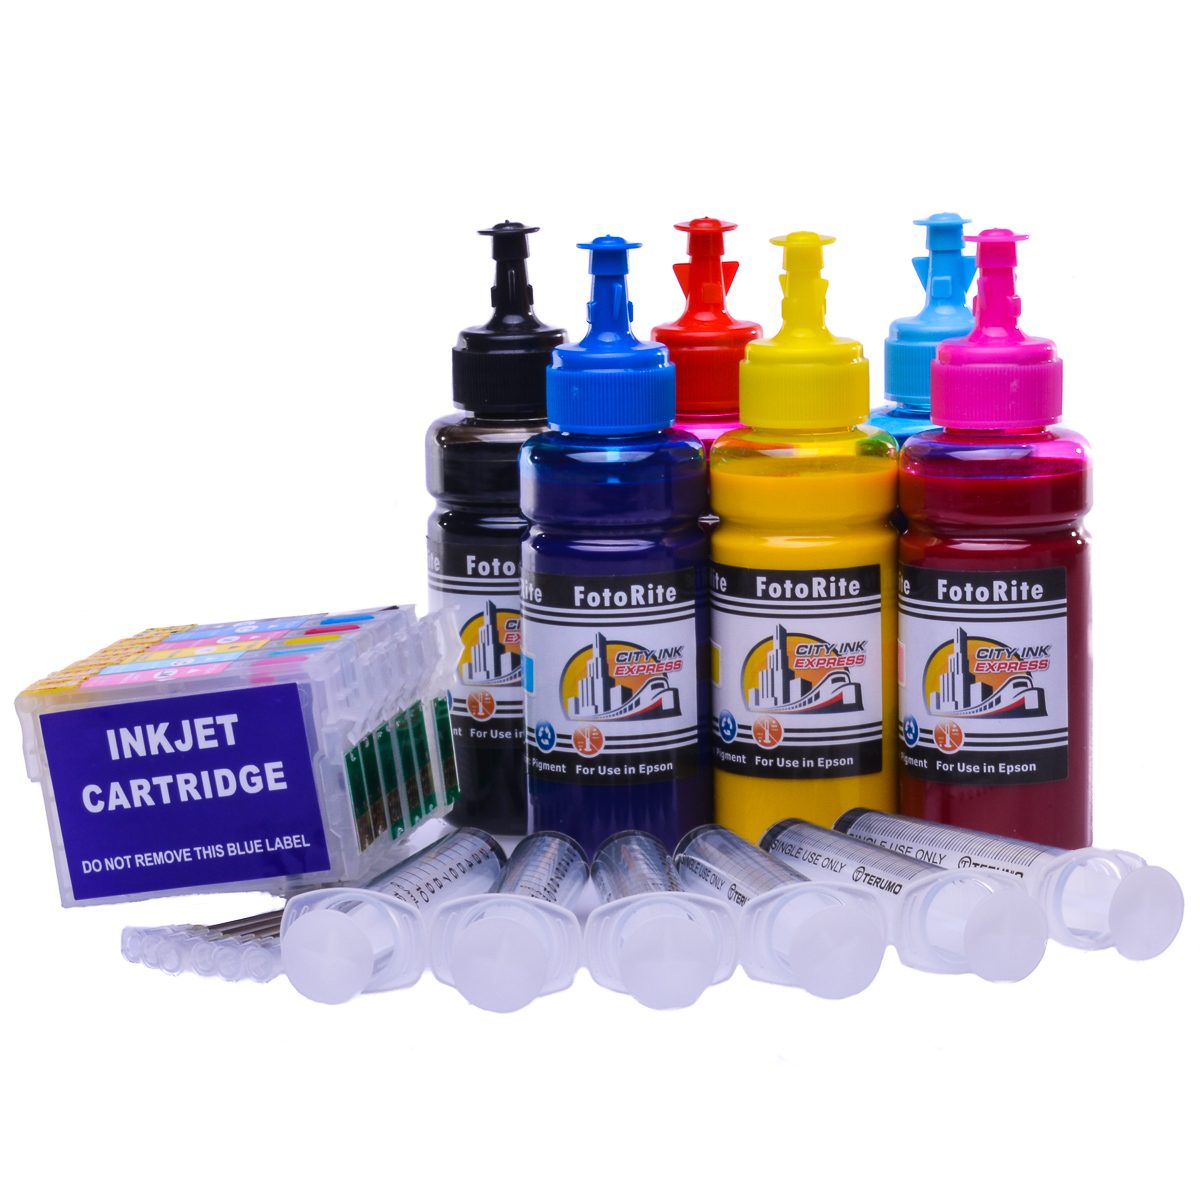 Refillable pigment Cheap printer cartridges for Epson Stylus 1500W Owl Inks T0791-6  Multipack